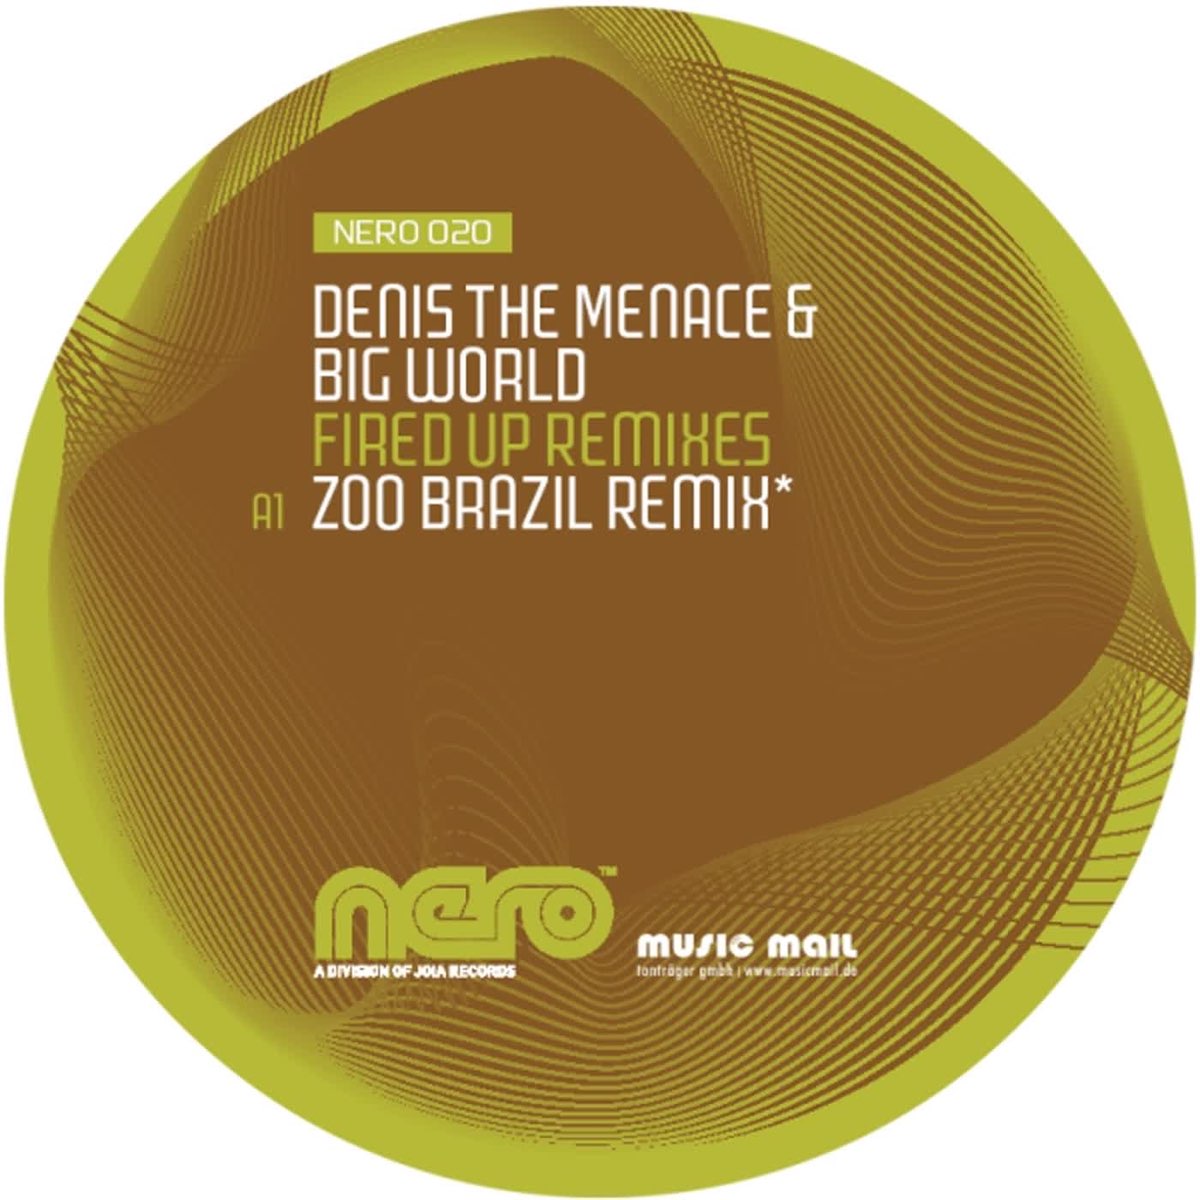 Big World & Denis the Menace. Fired up ремикс. Big World & Denis the Menace show. Big World & Denis the Menace show me a reason. Show me a reason denis the menace